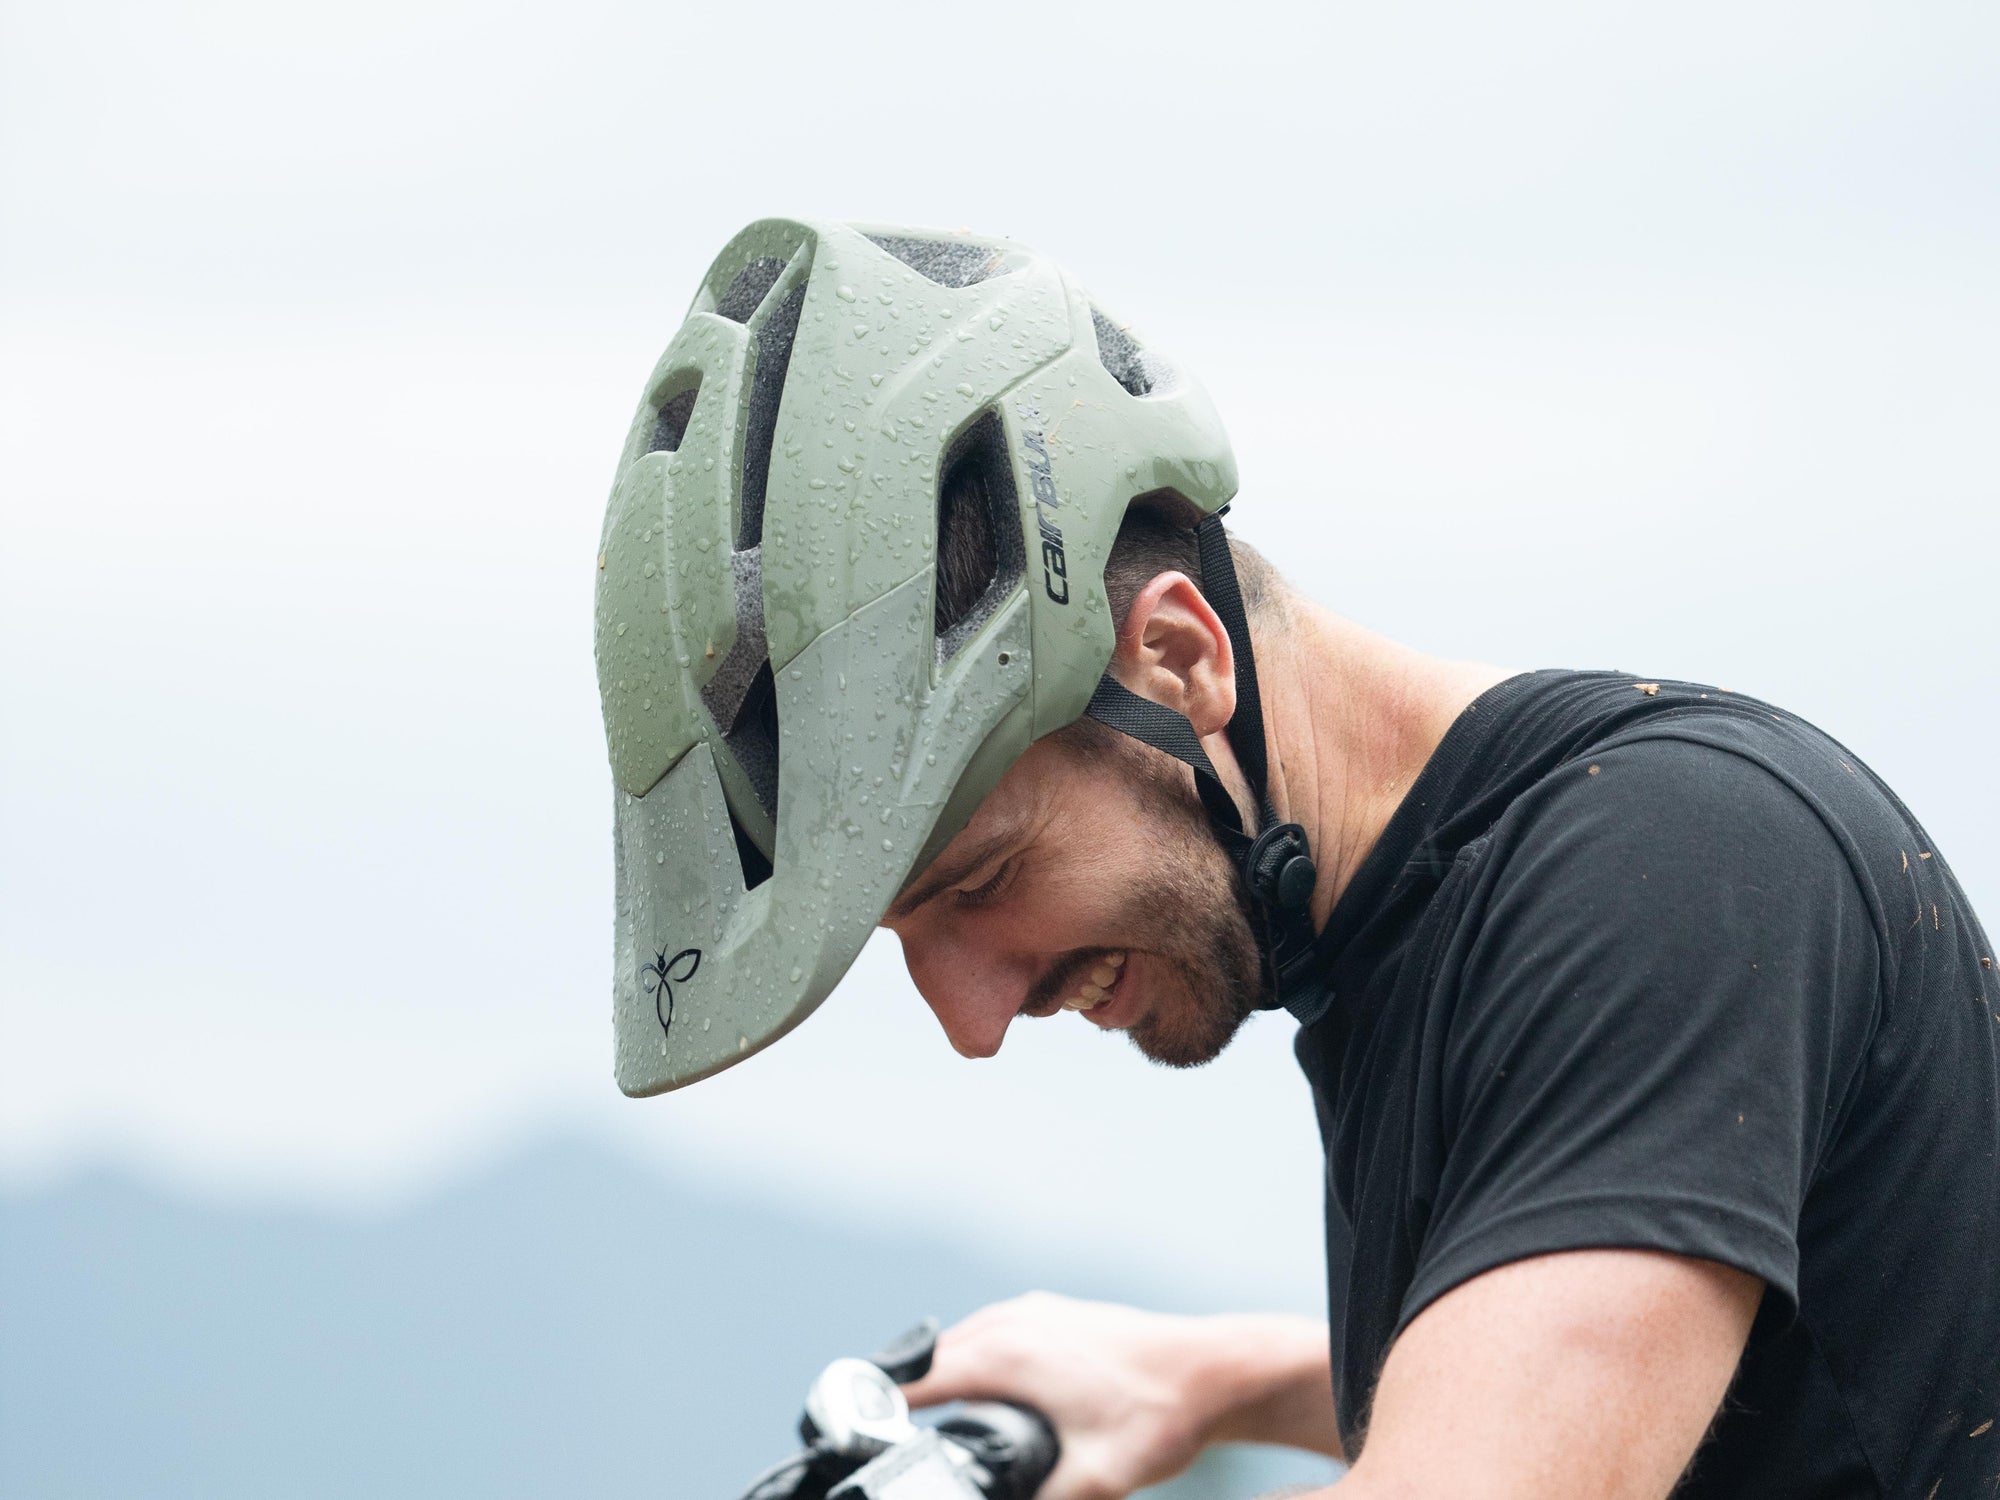 It’s of Great Importance to Wear a Helmet When Riding